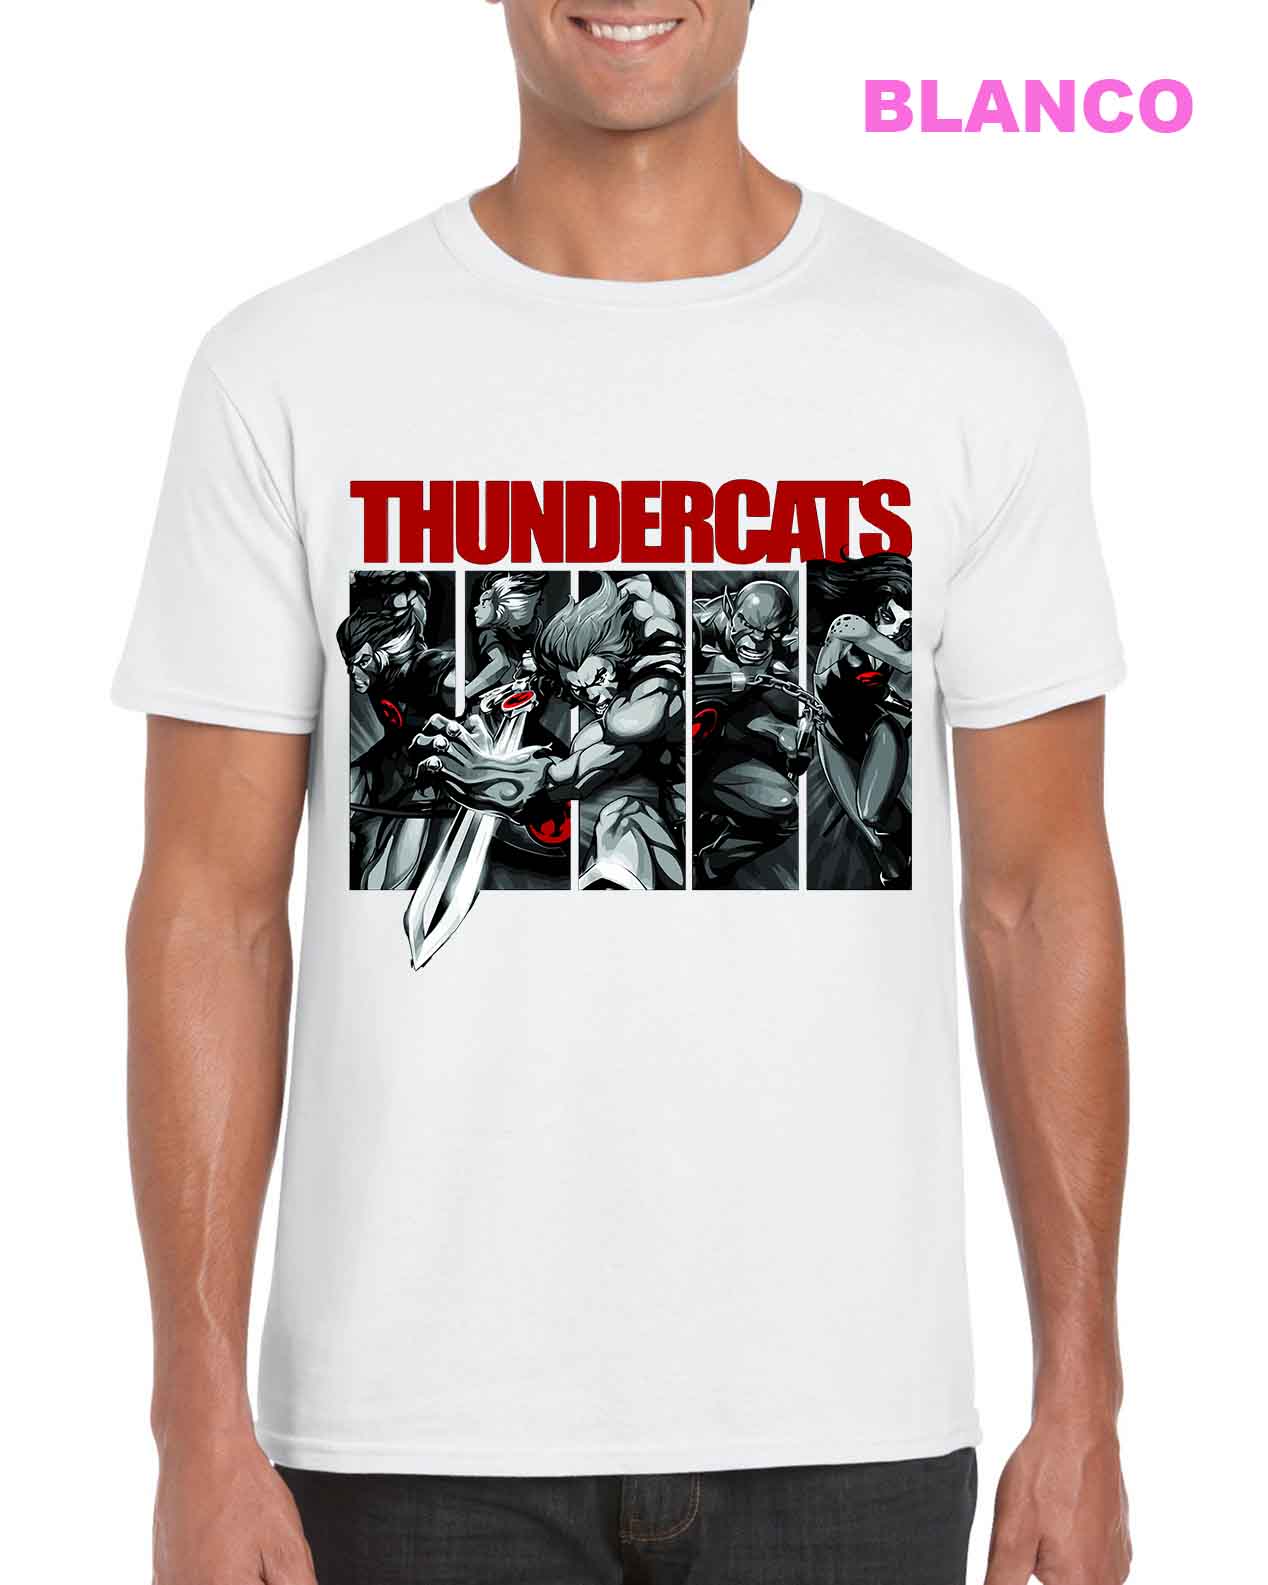 Thundercats - Art